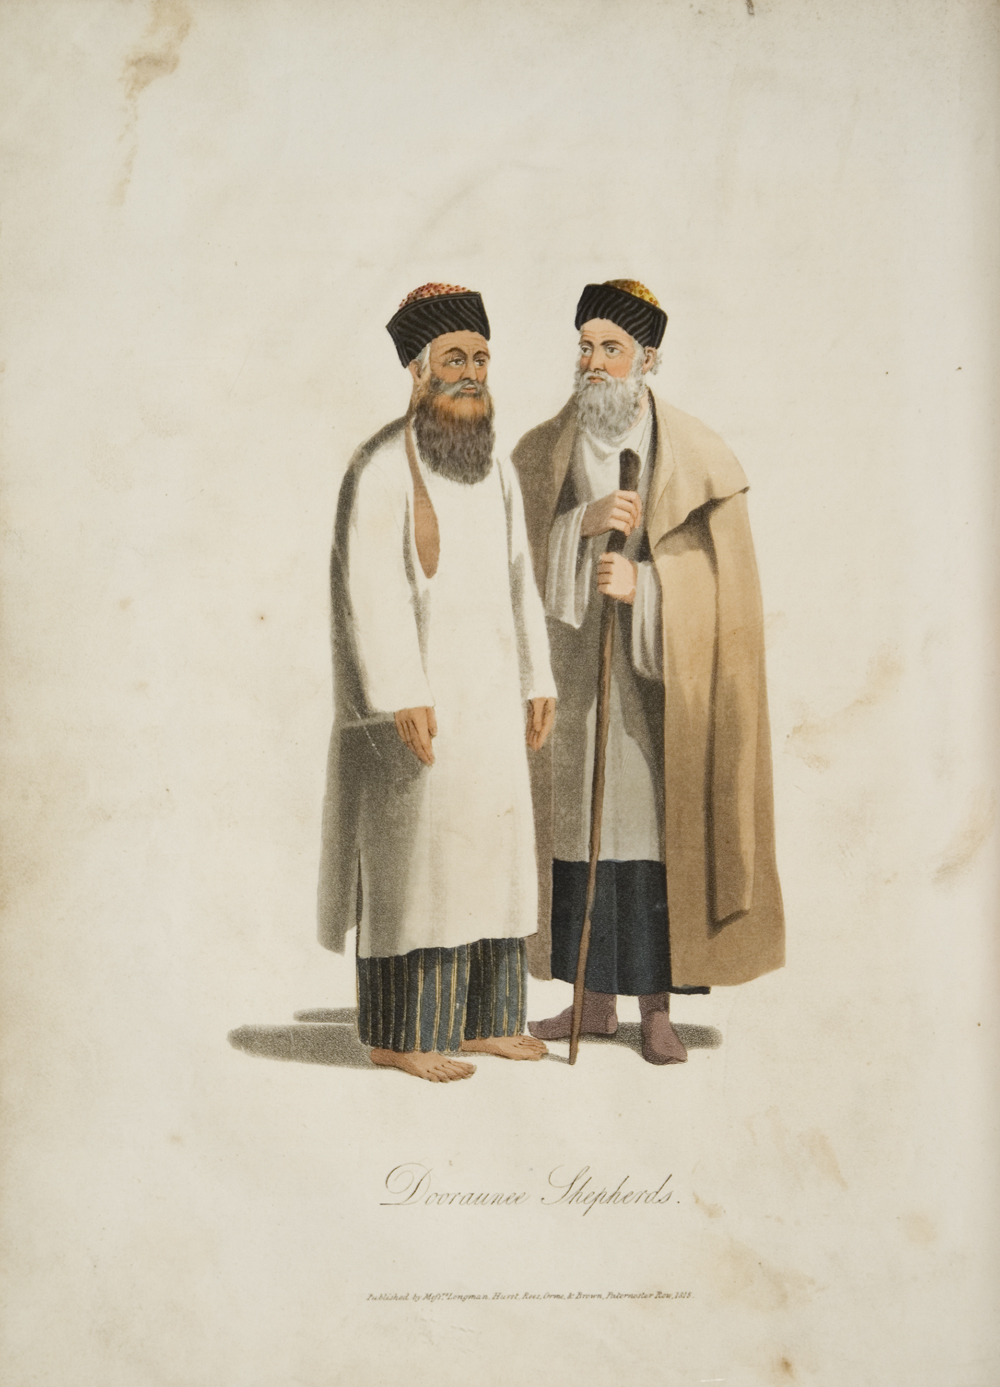 "Dooraunee Shepherds." The man to the left is wearing a kosai. Aquatint, from Mountstuart Elphinstone 1815,  Plate II, opp. p. 239.